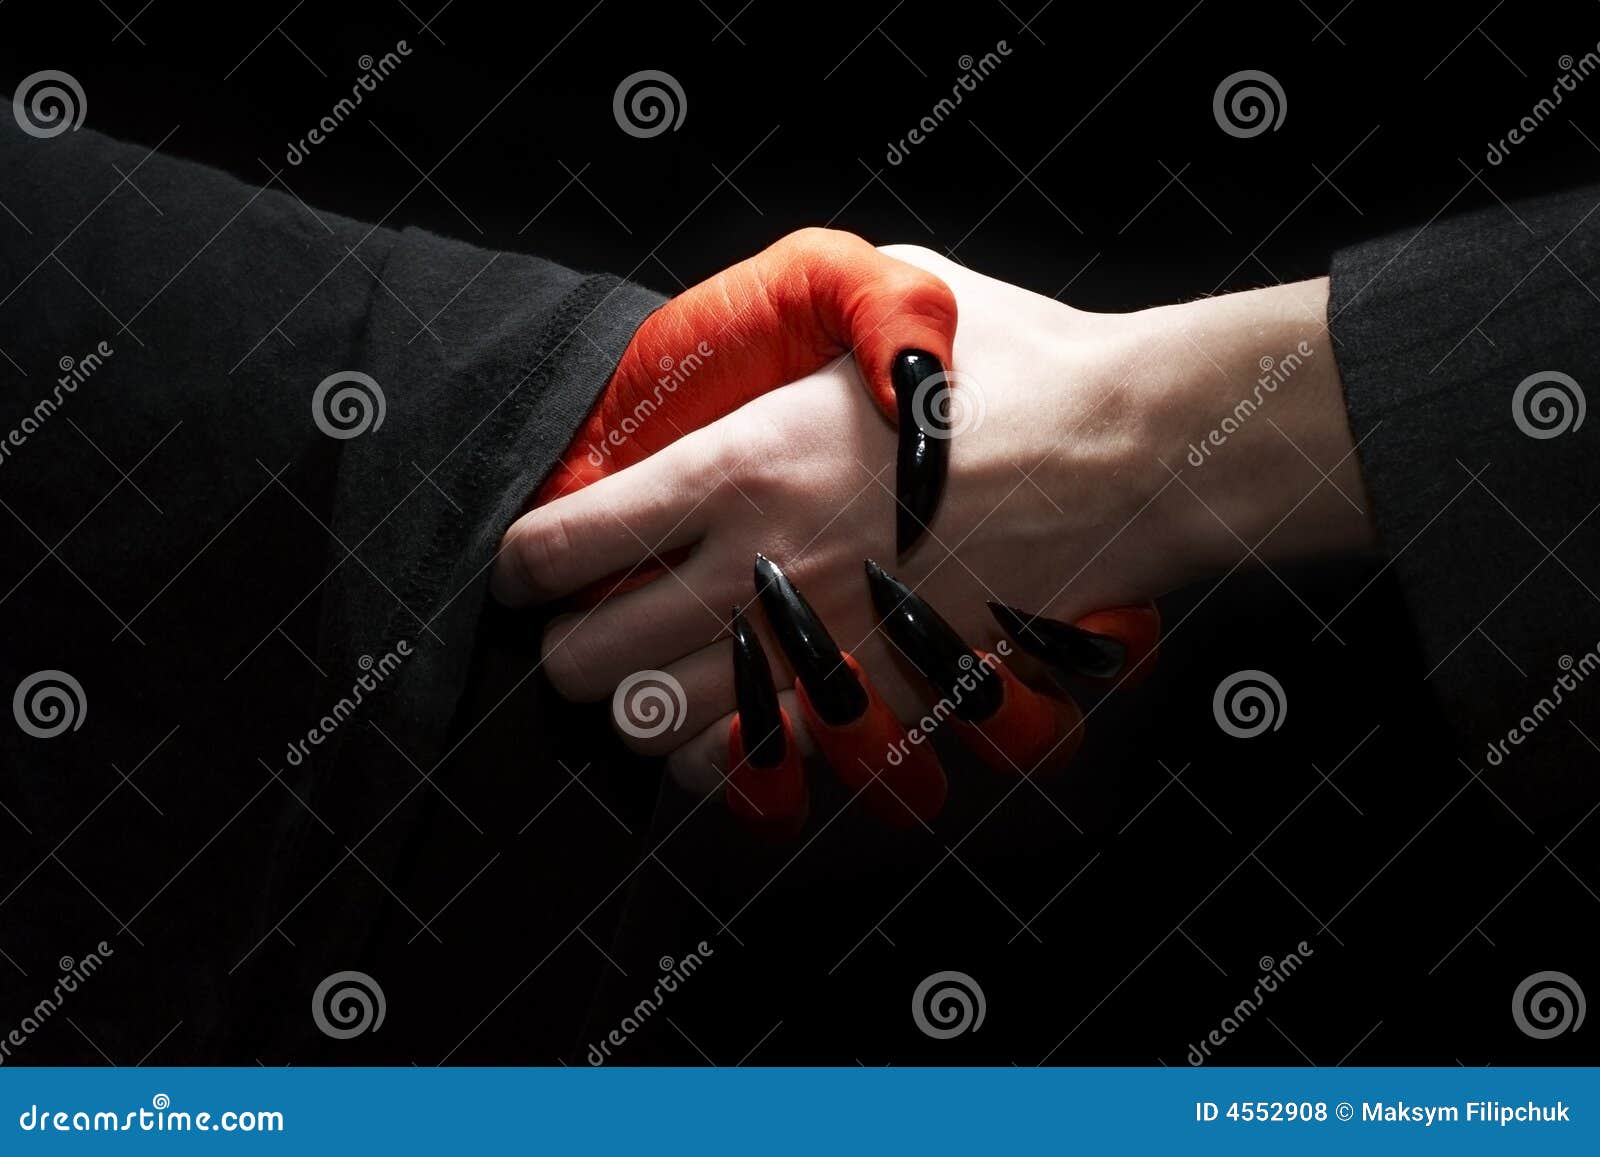 handshake with devil